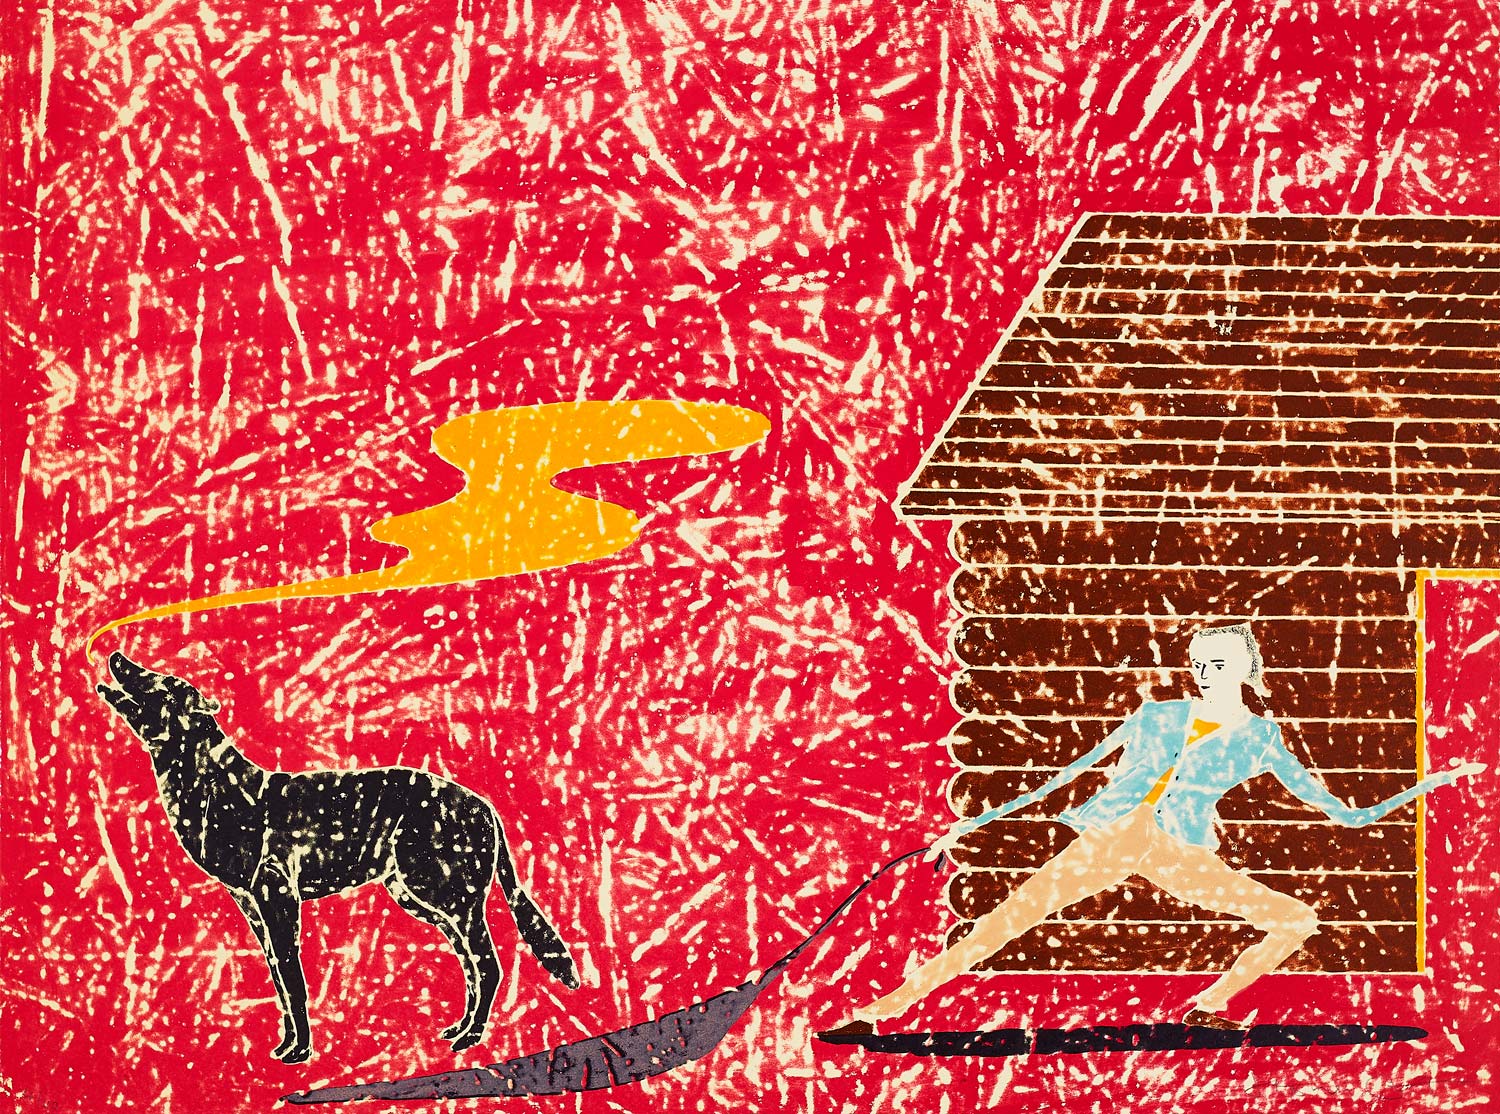 Stealing Shadows (Howling Wolf), 45 x 60 cm, 7-Colour Lithograph